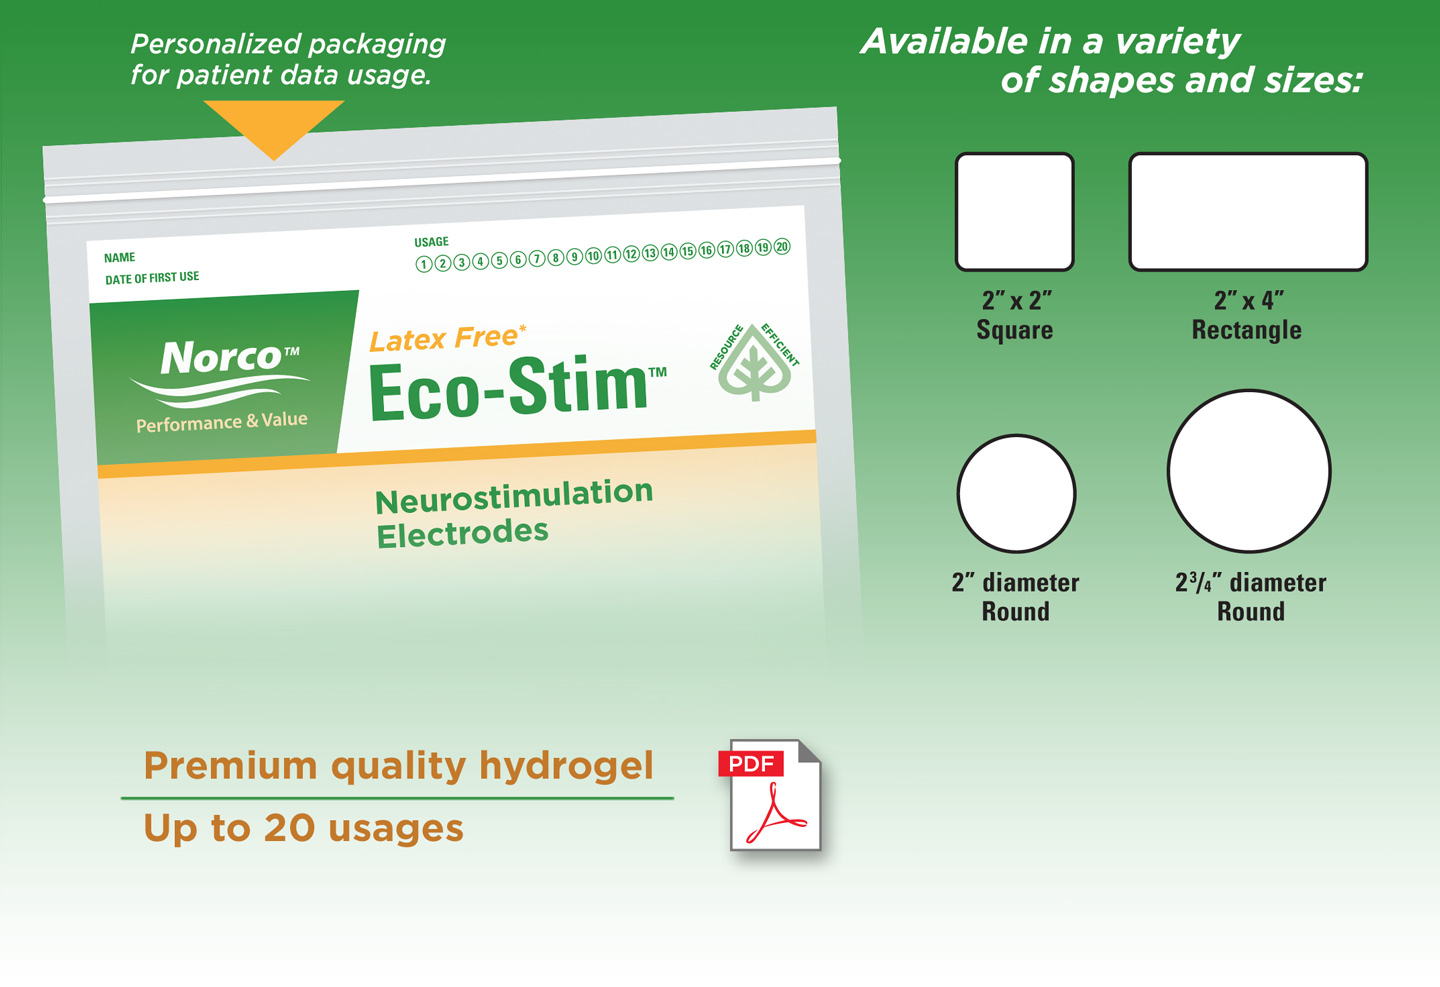 Norco Eco-Stim Electrodes